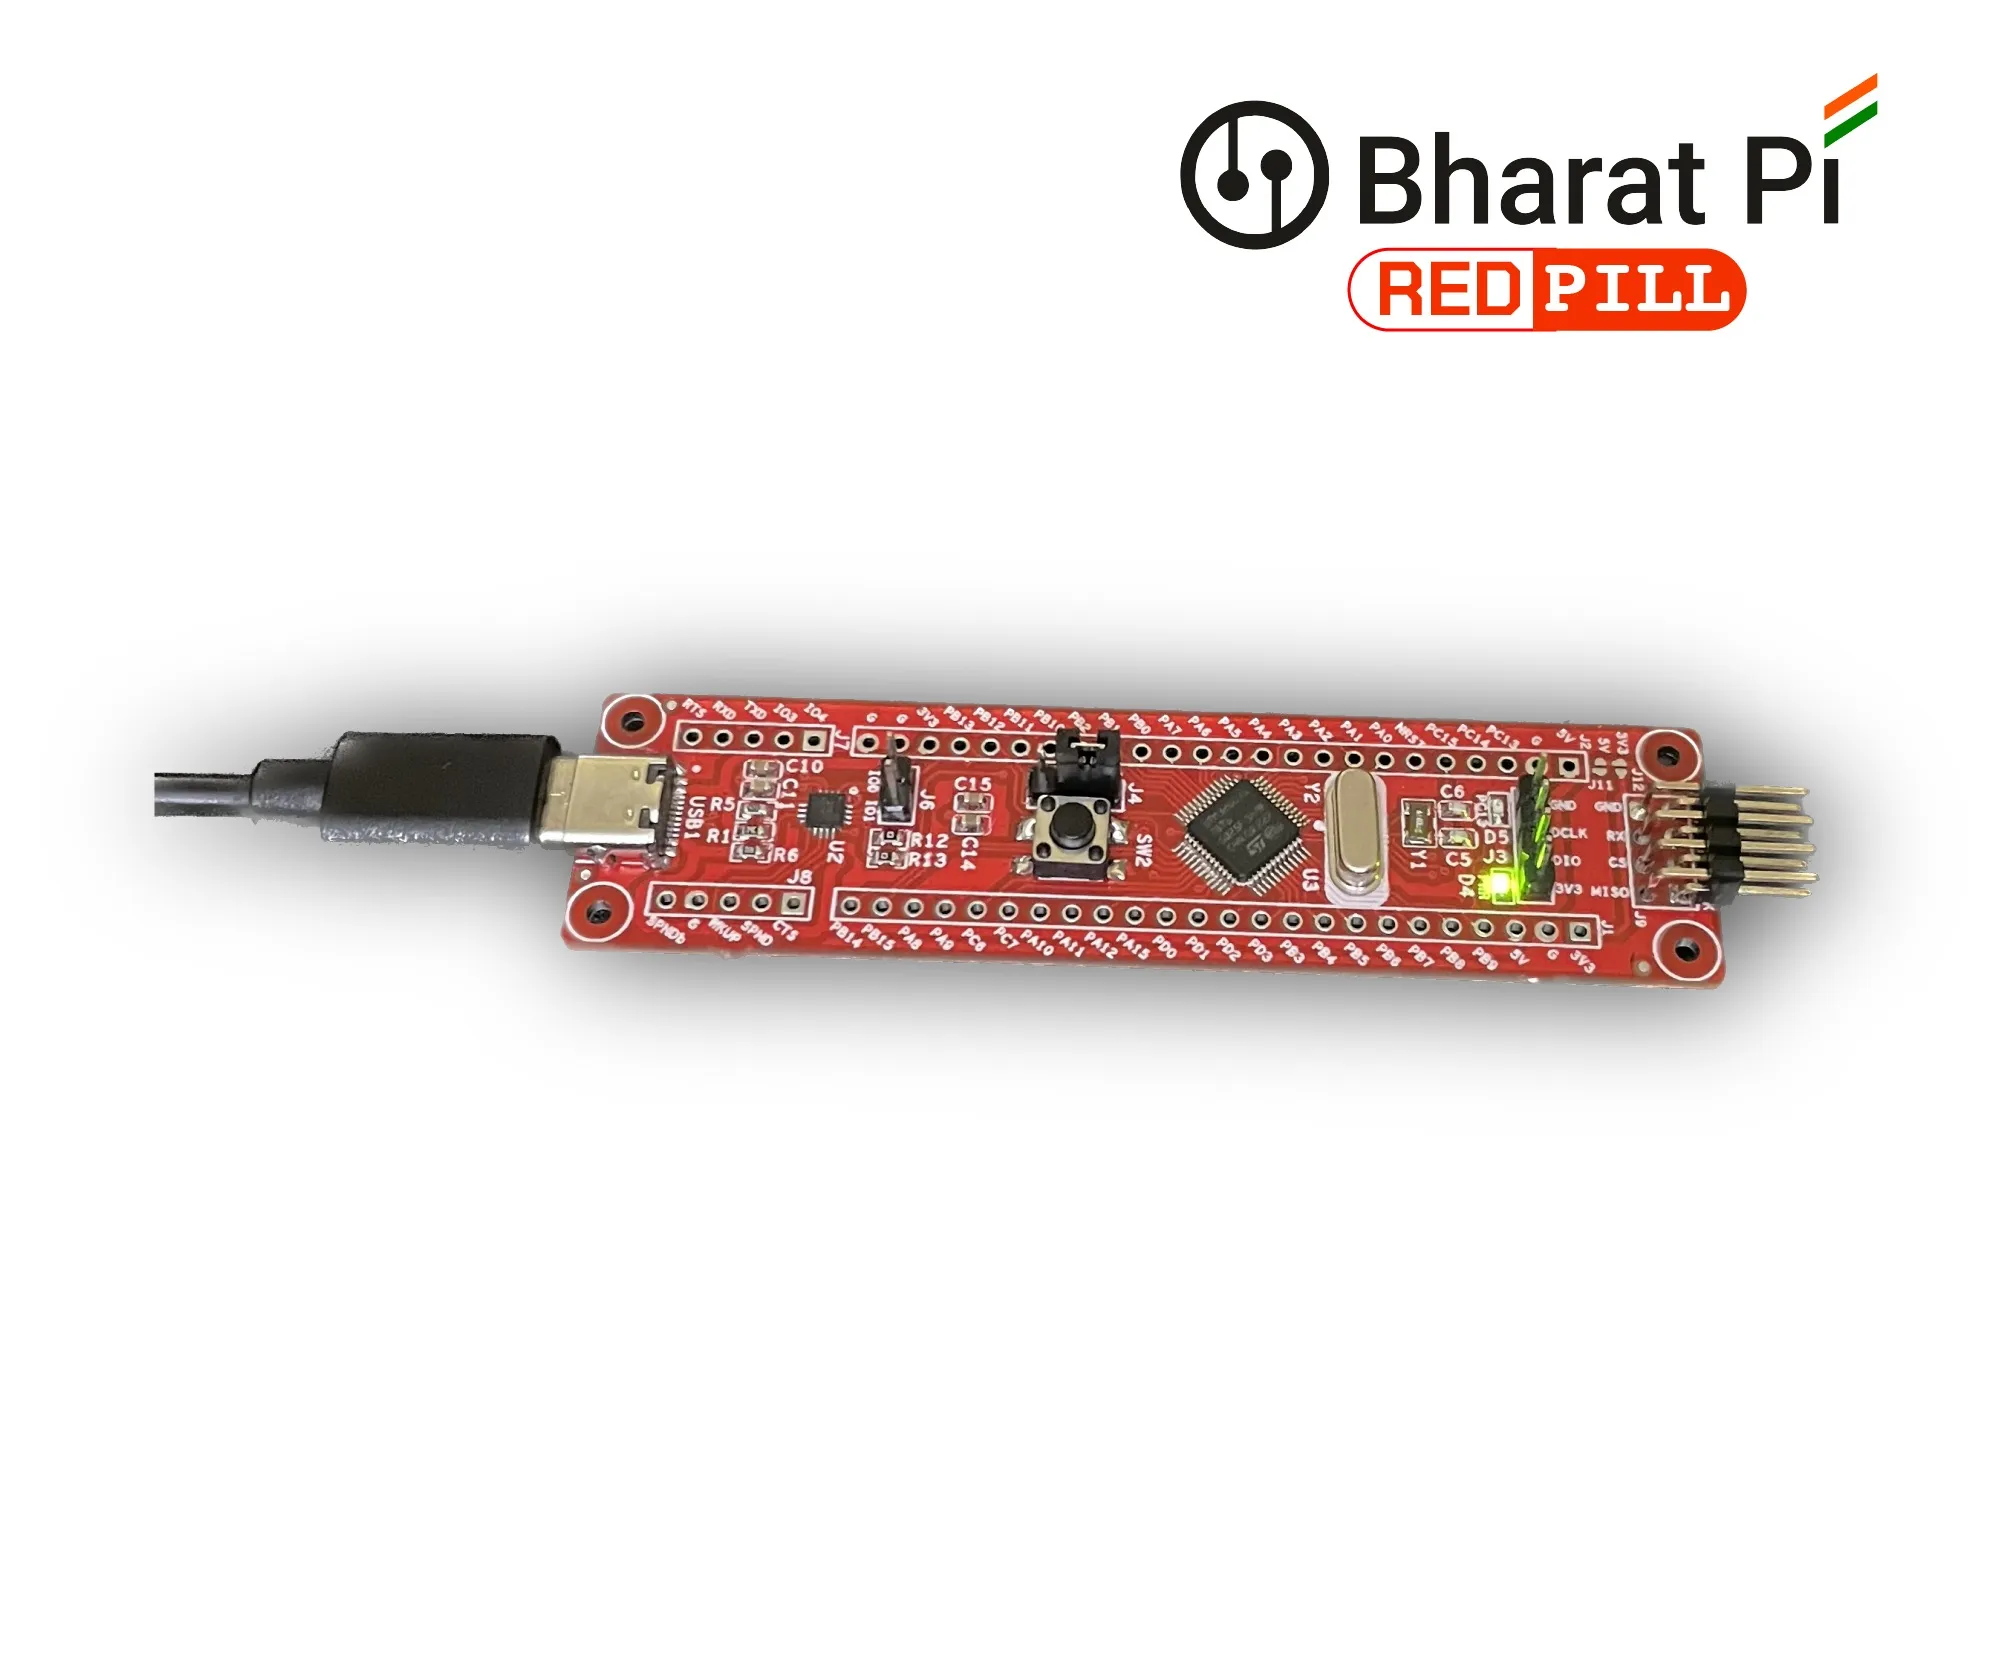 Bharat Pi 'Redpill' and STMCUBE IDE Integration for Blynk LED Control